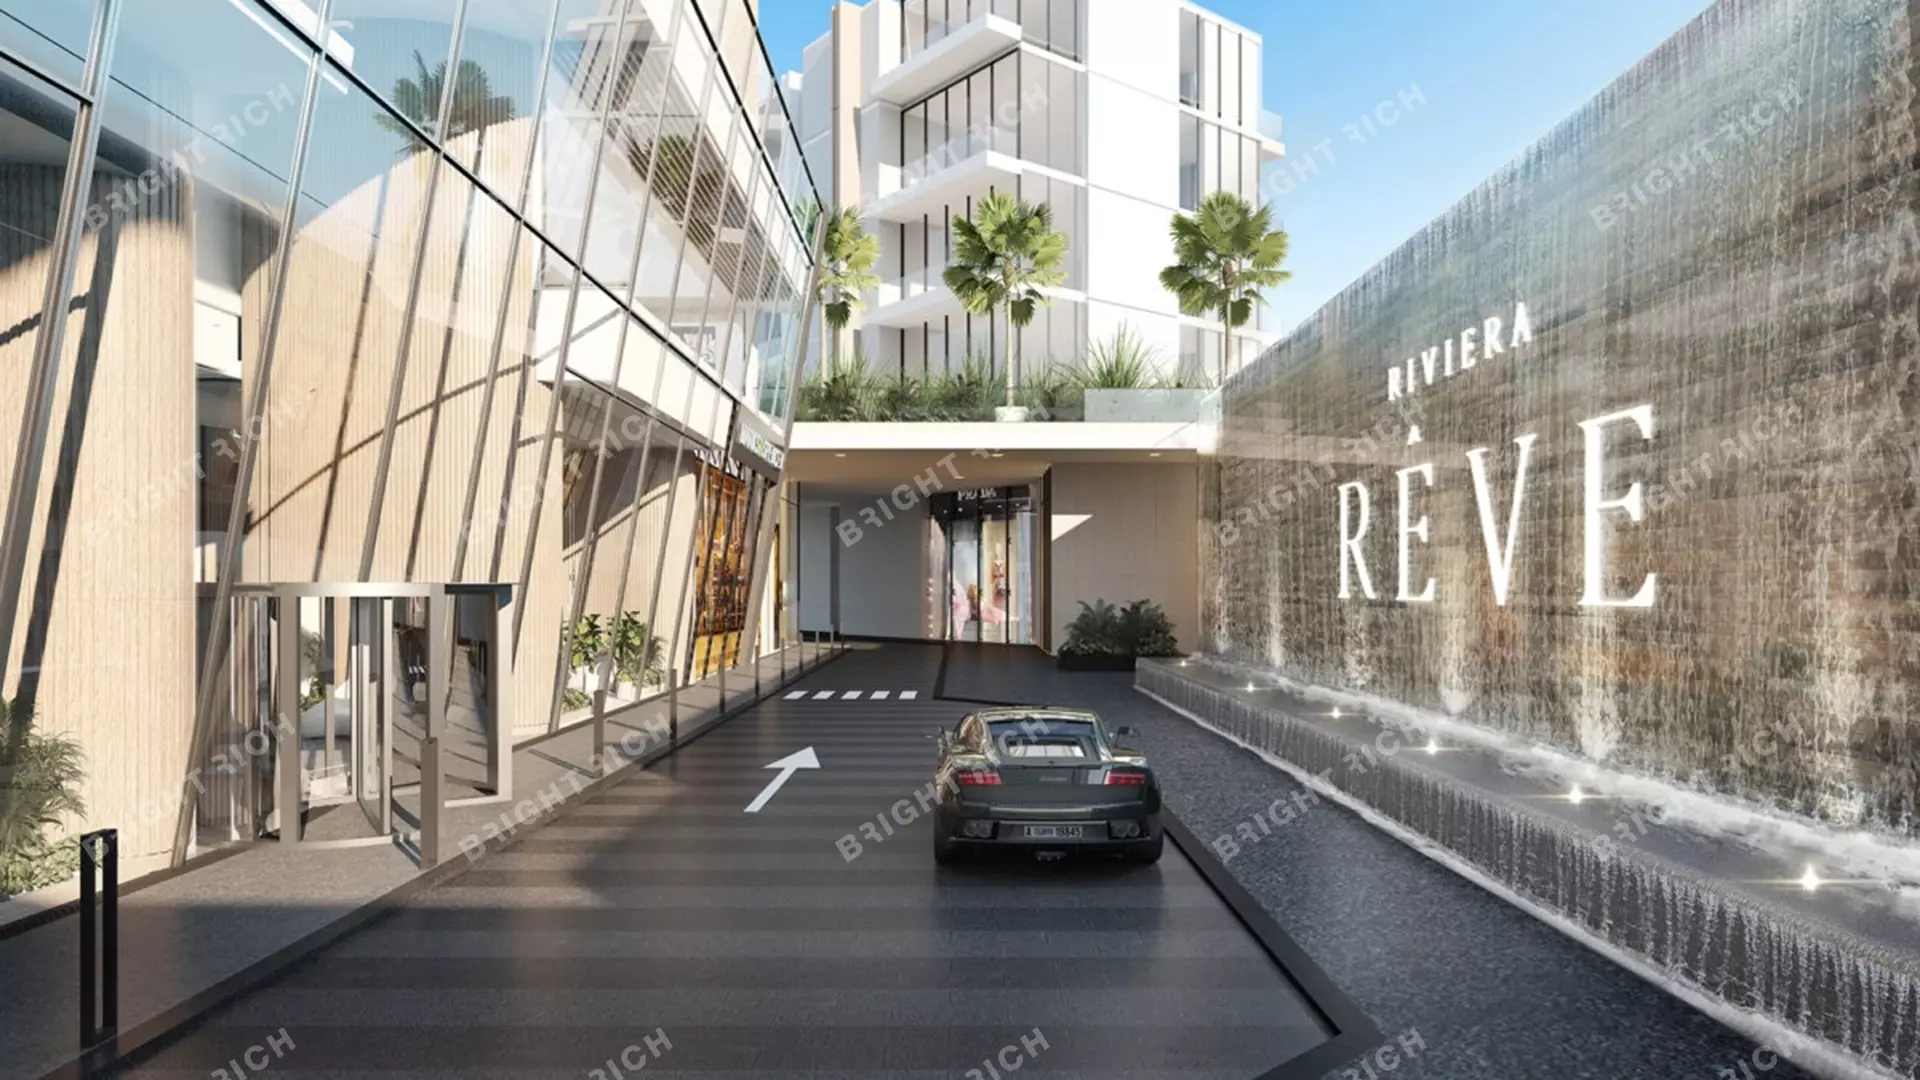 Riviera Reve Building 1 , апарт-комплекс в Дубае - 4